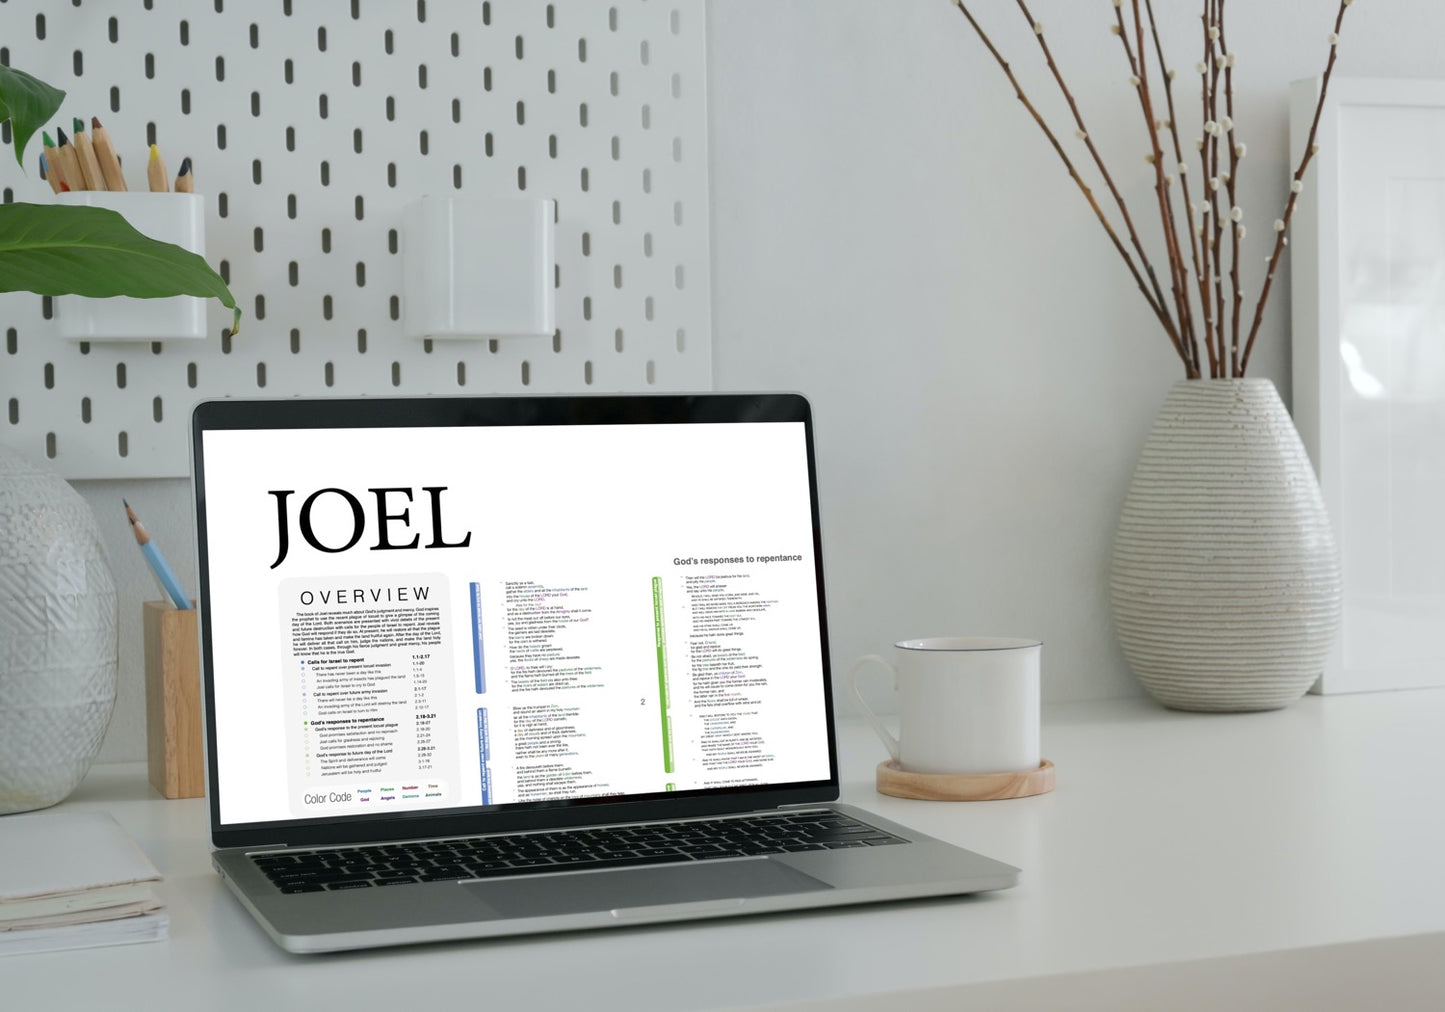 Joel Panorama PDF